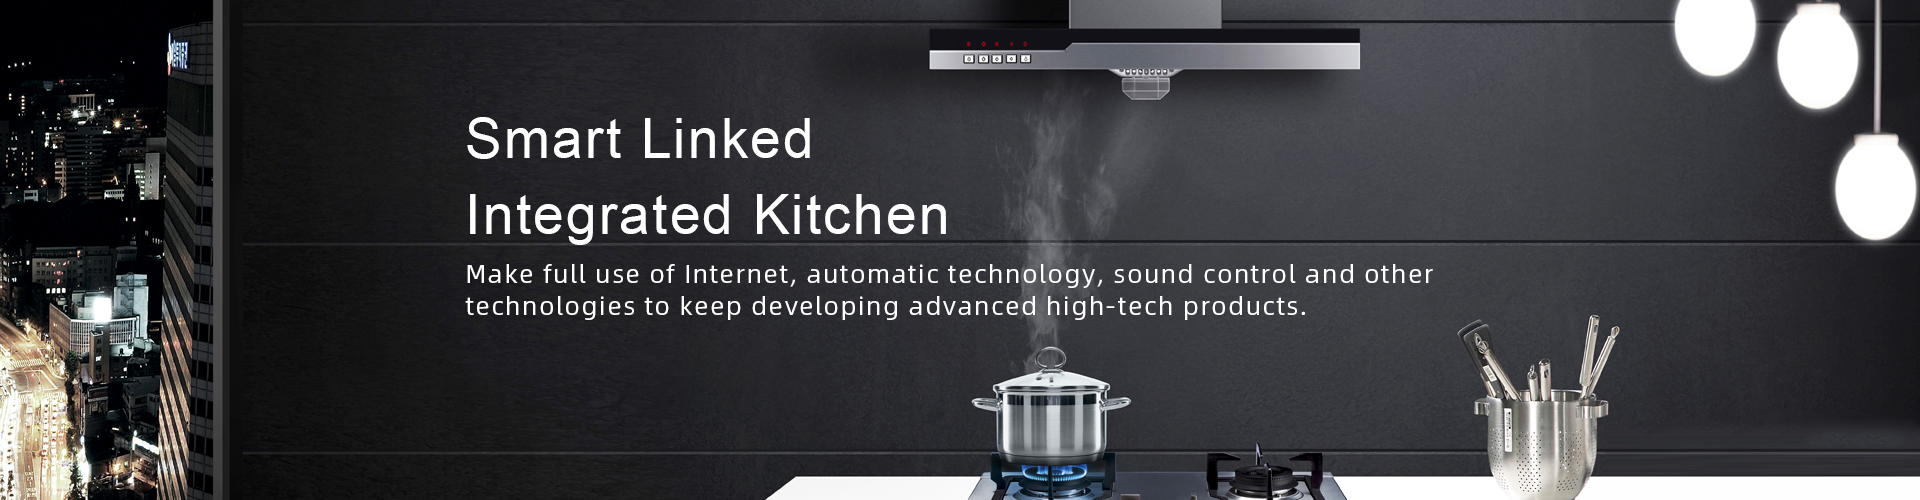 Smart-Linked-Integrated Kitchen